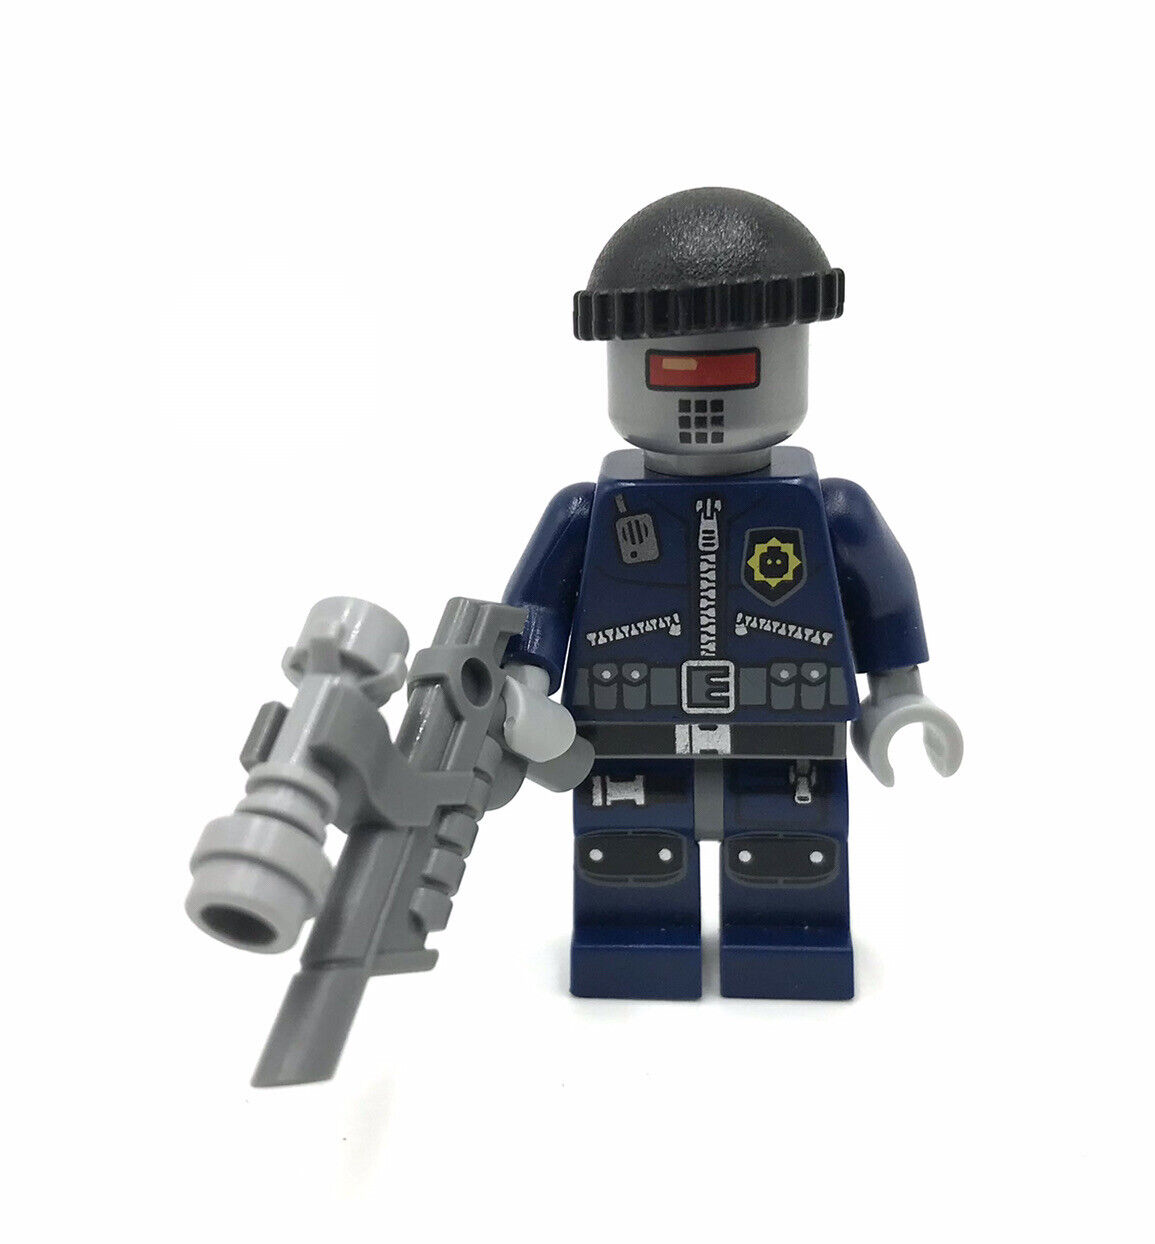 LEGO Robo SWAT Knit Cap minifigure The Lego Movie book mini figure robot